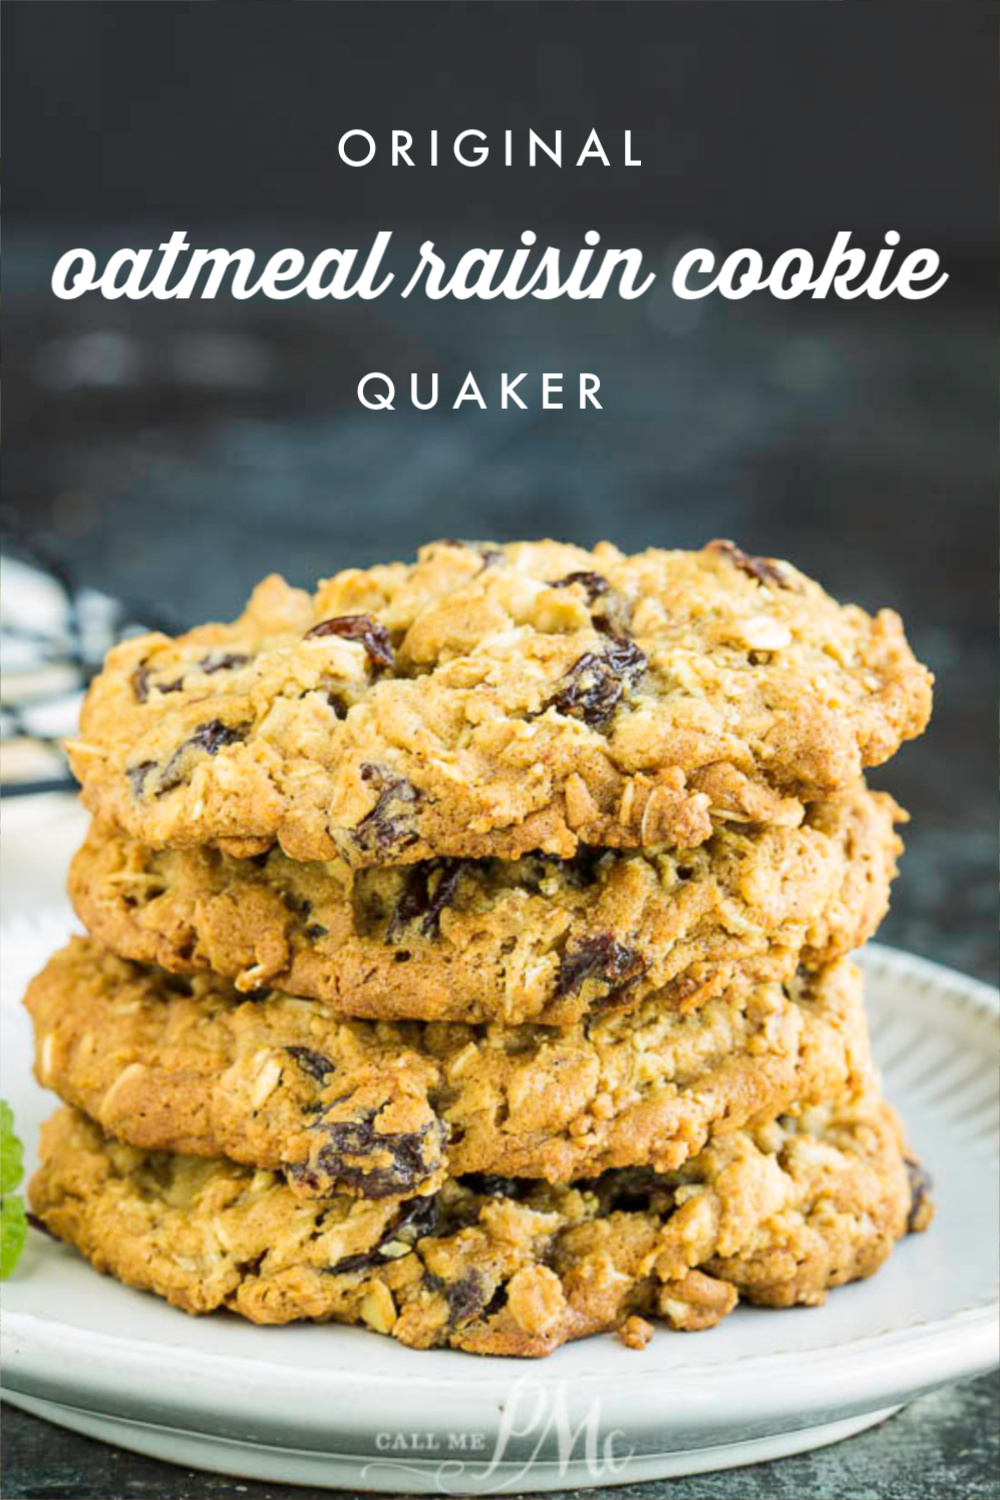 Original Quaker Oatmeal Raisin Cookie Recipe Call Me Pmc Mefics